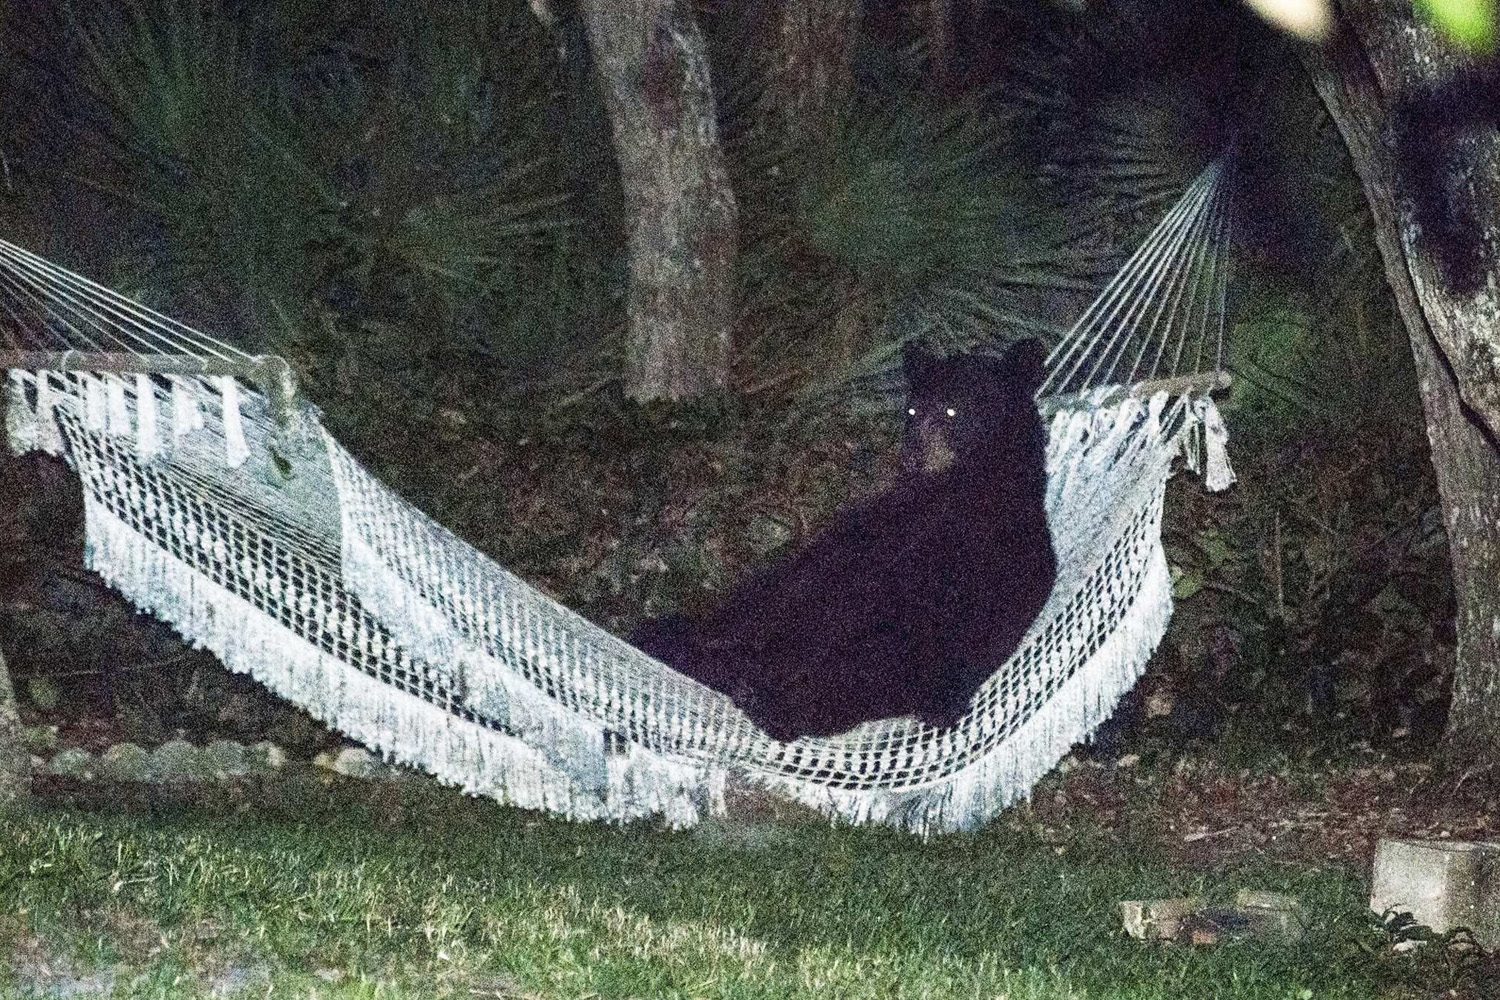 A black bear lies on a hammock at a residential back yard in Daytona Beach Florida